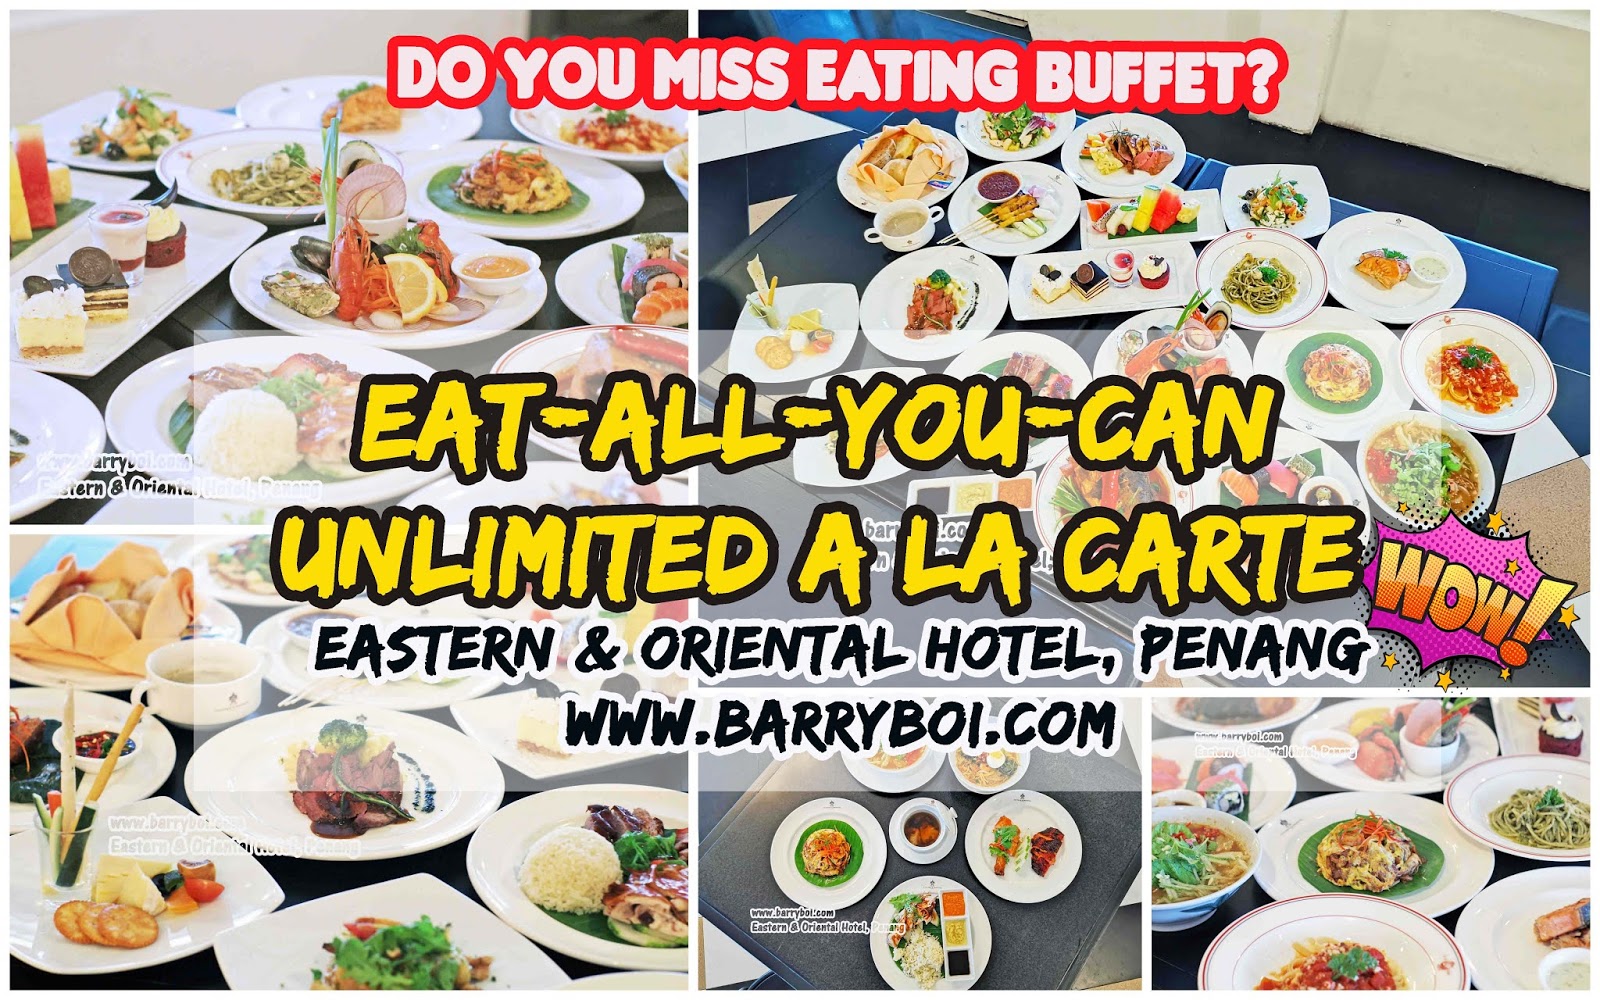 E&o penang buffet dinner price 2021